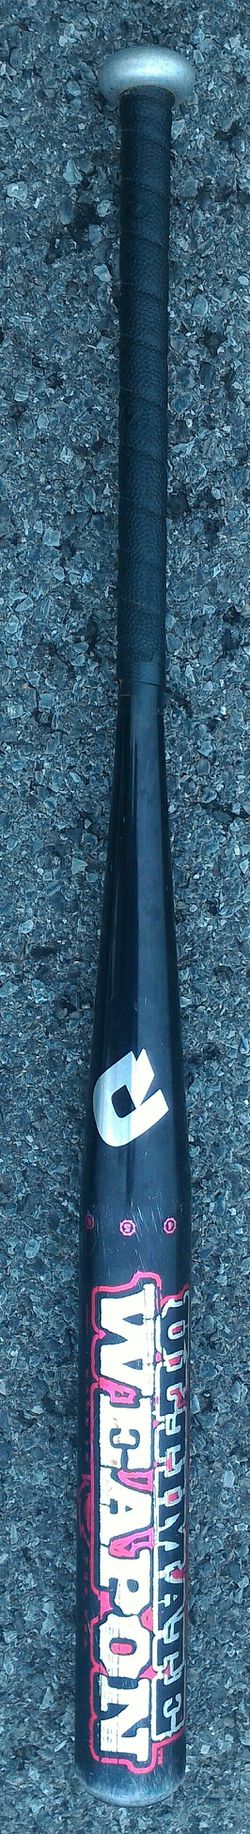 DeMarini Ultimate Weapon Singlewall Slowpitch Softball Baseball Bat 34/28